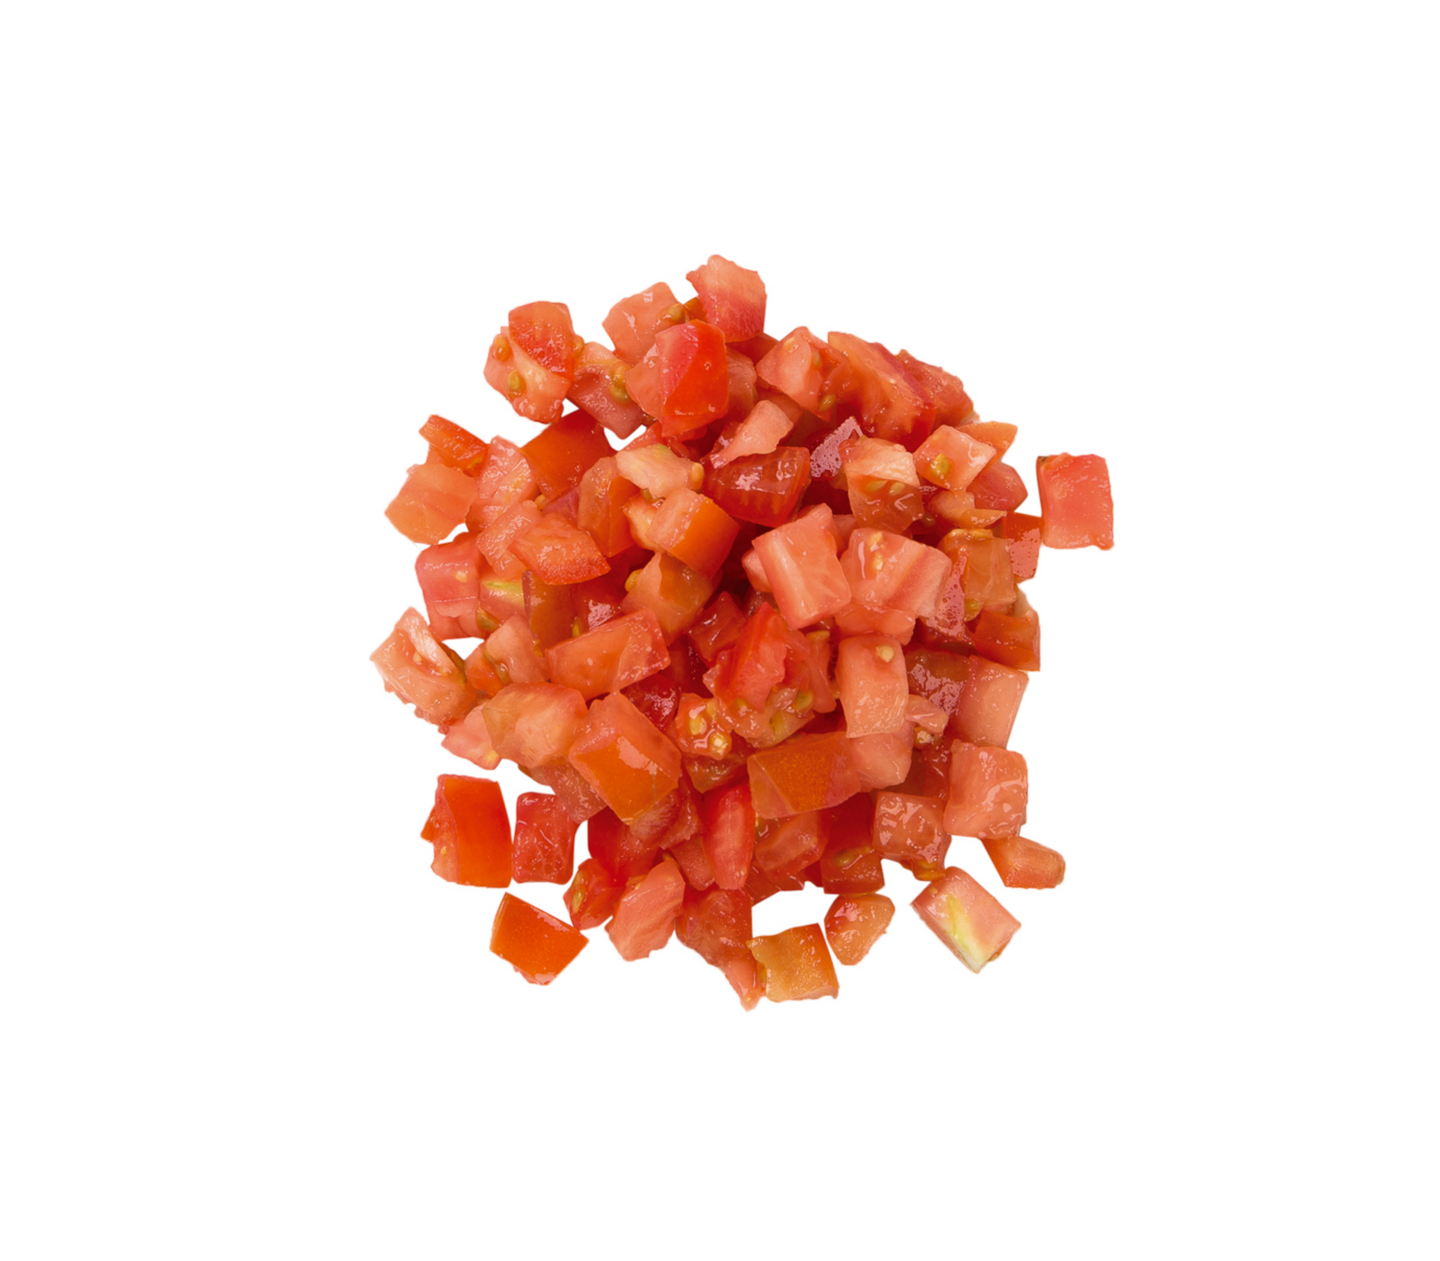 Salla Carte Tomaattikuutio 1kg